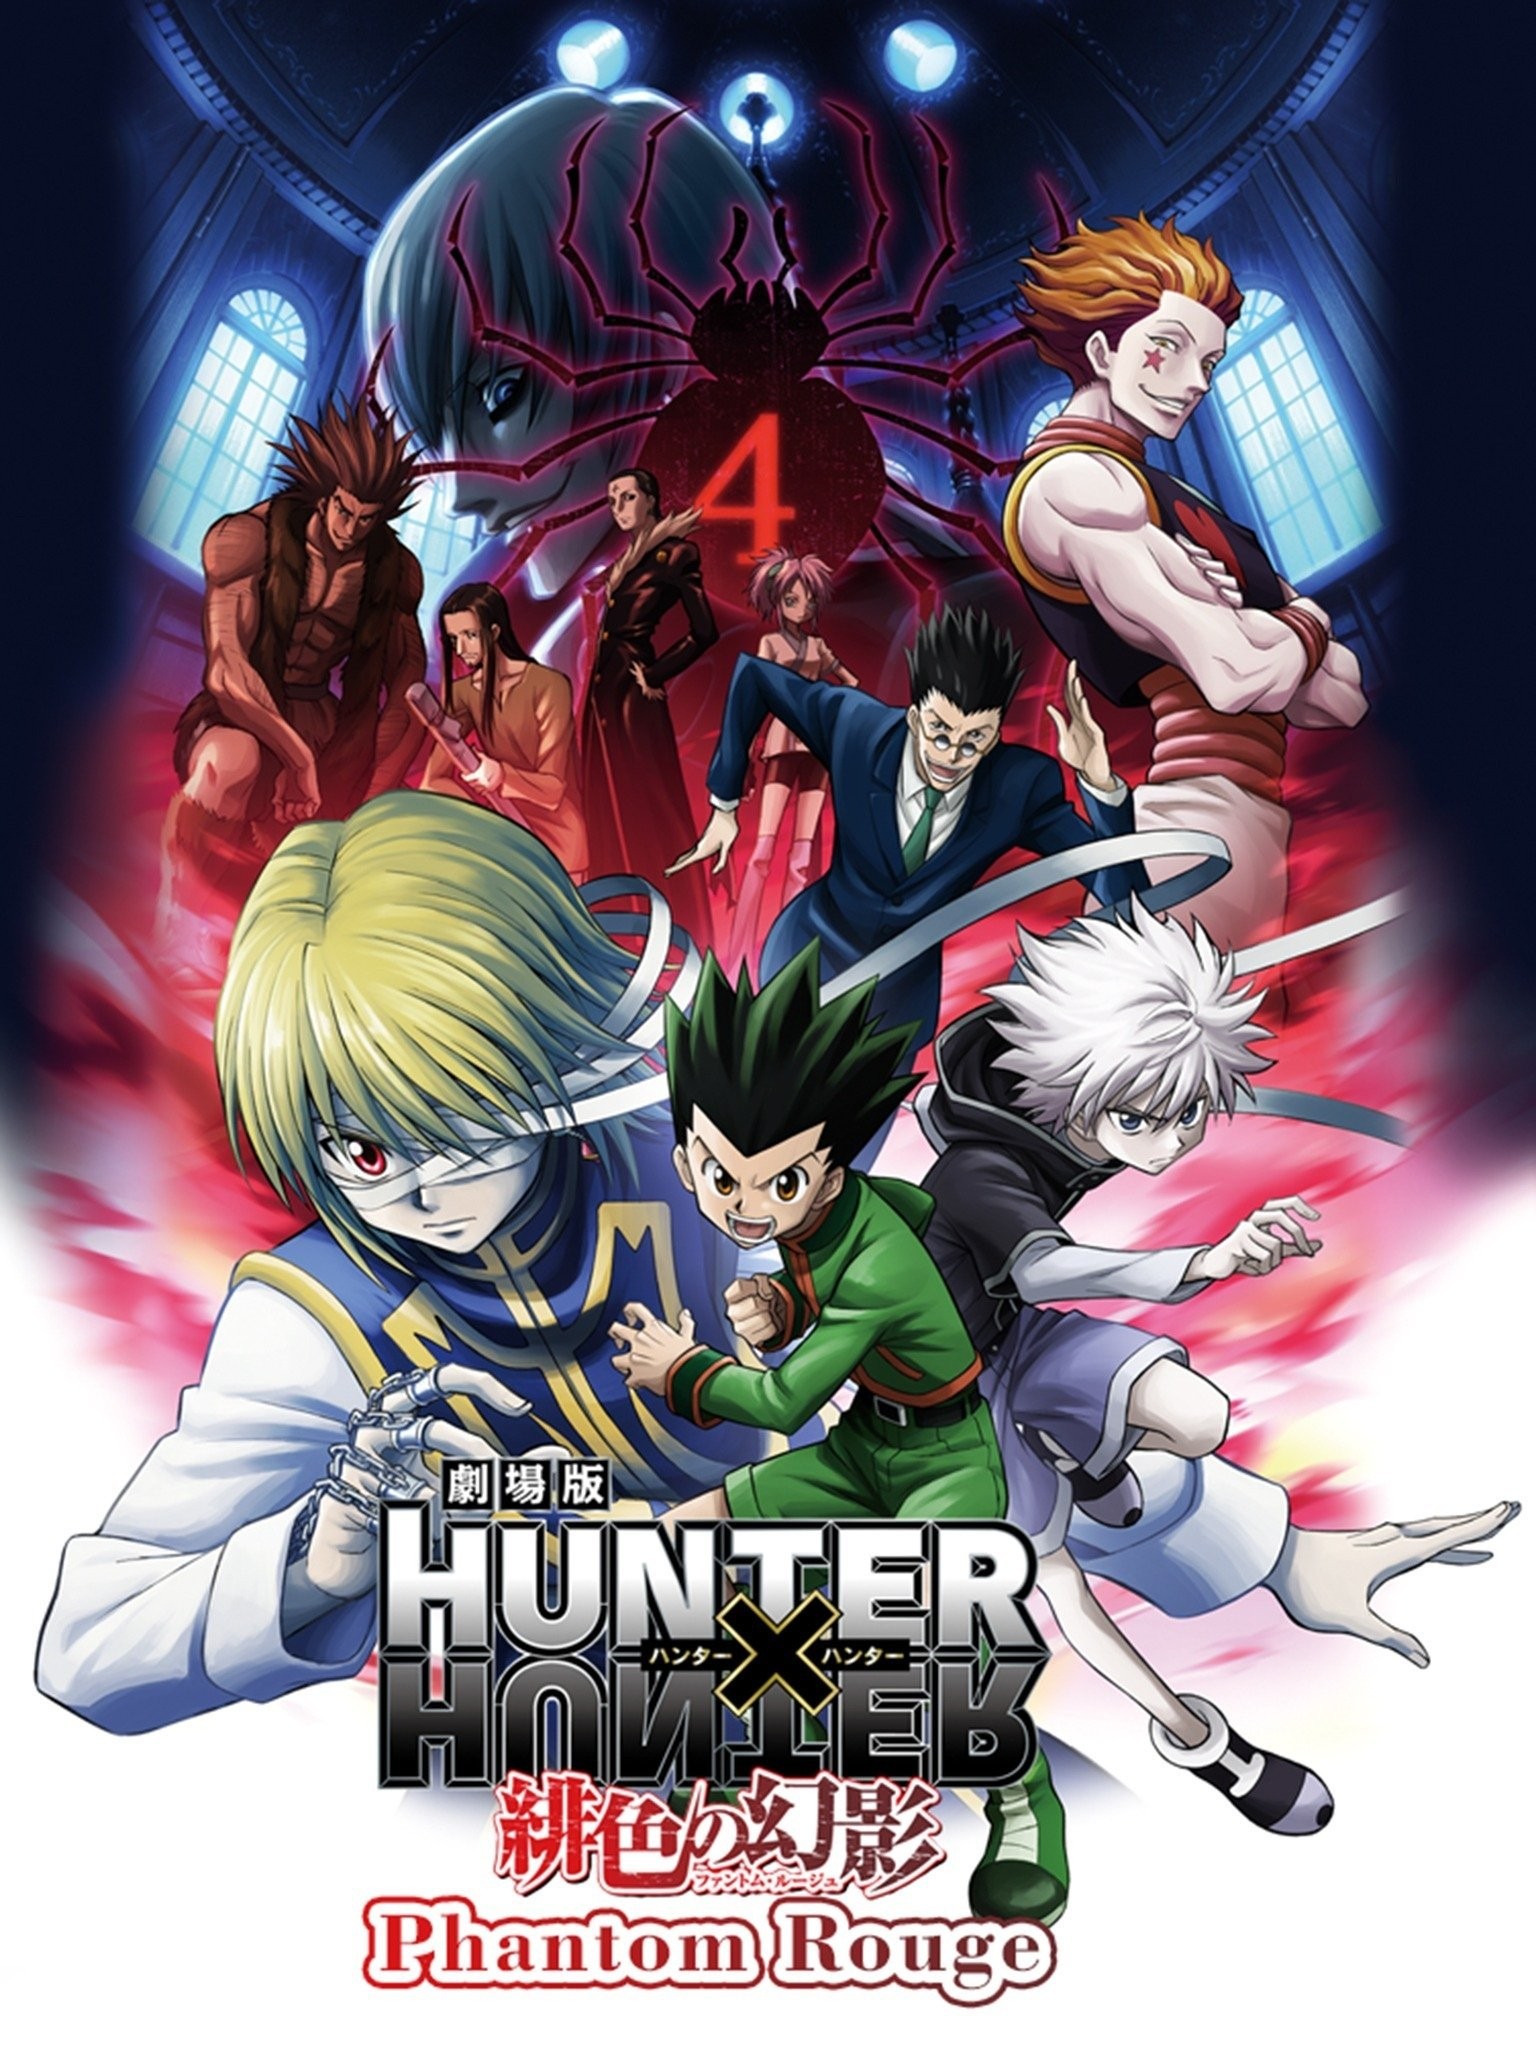 Hunter X Hunter 2011 HxH Main four and Hisoka poster 2013